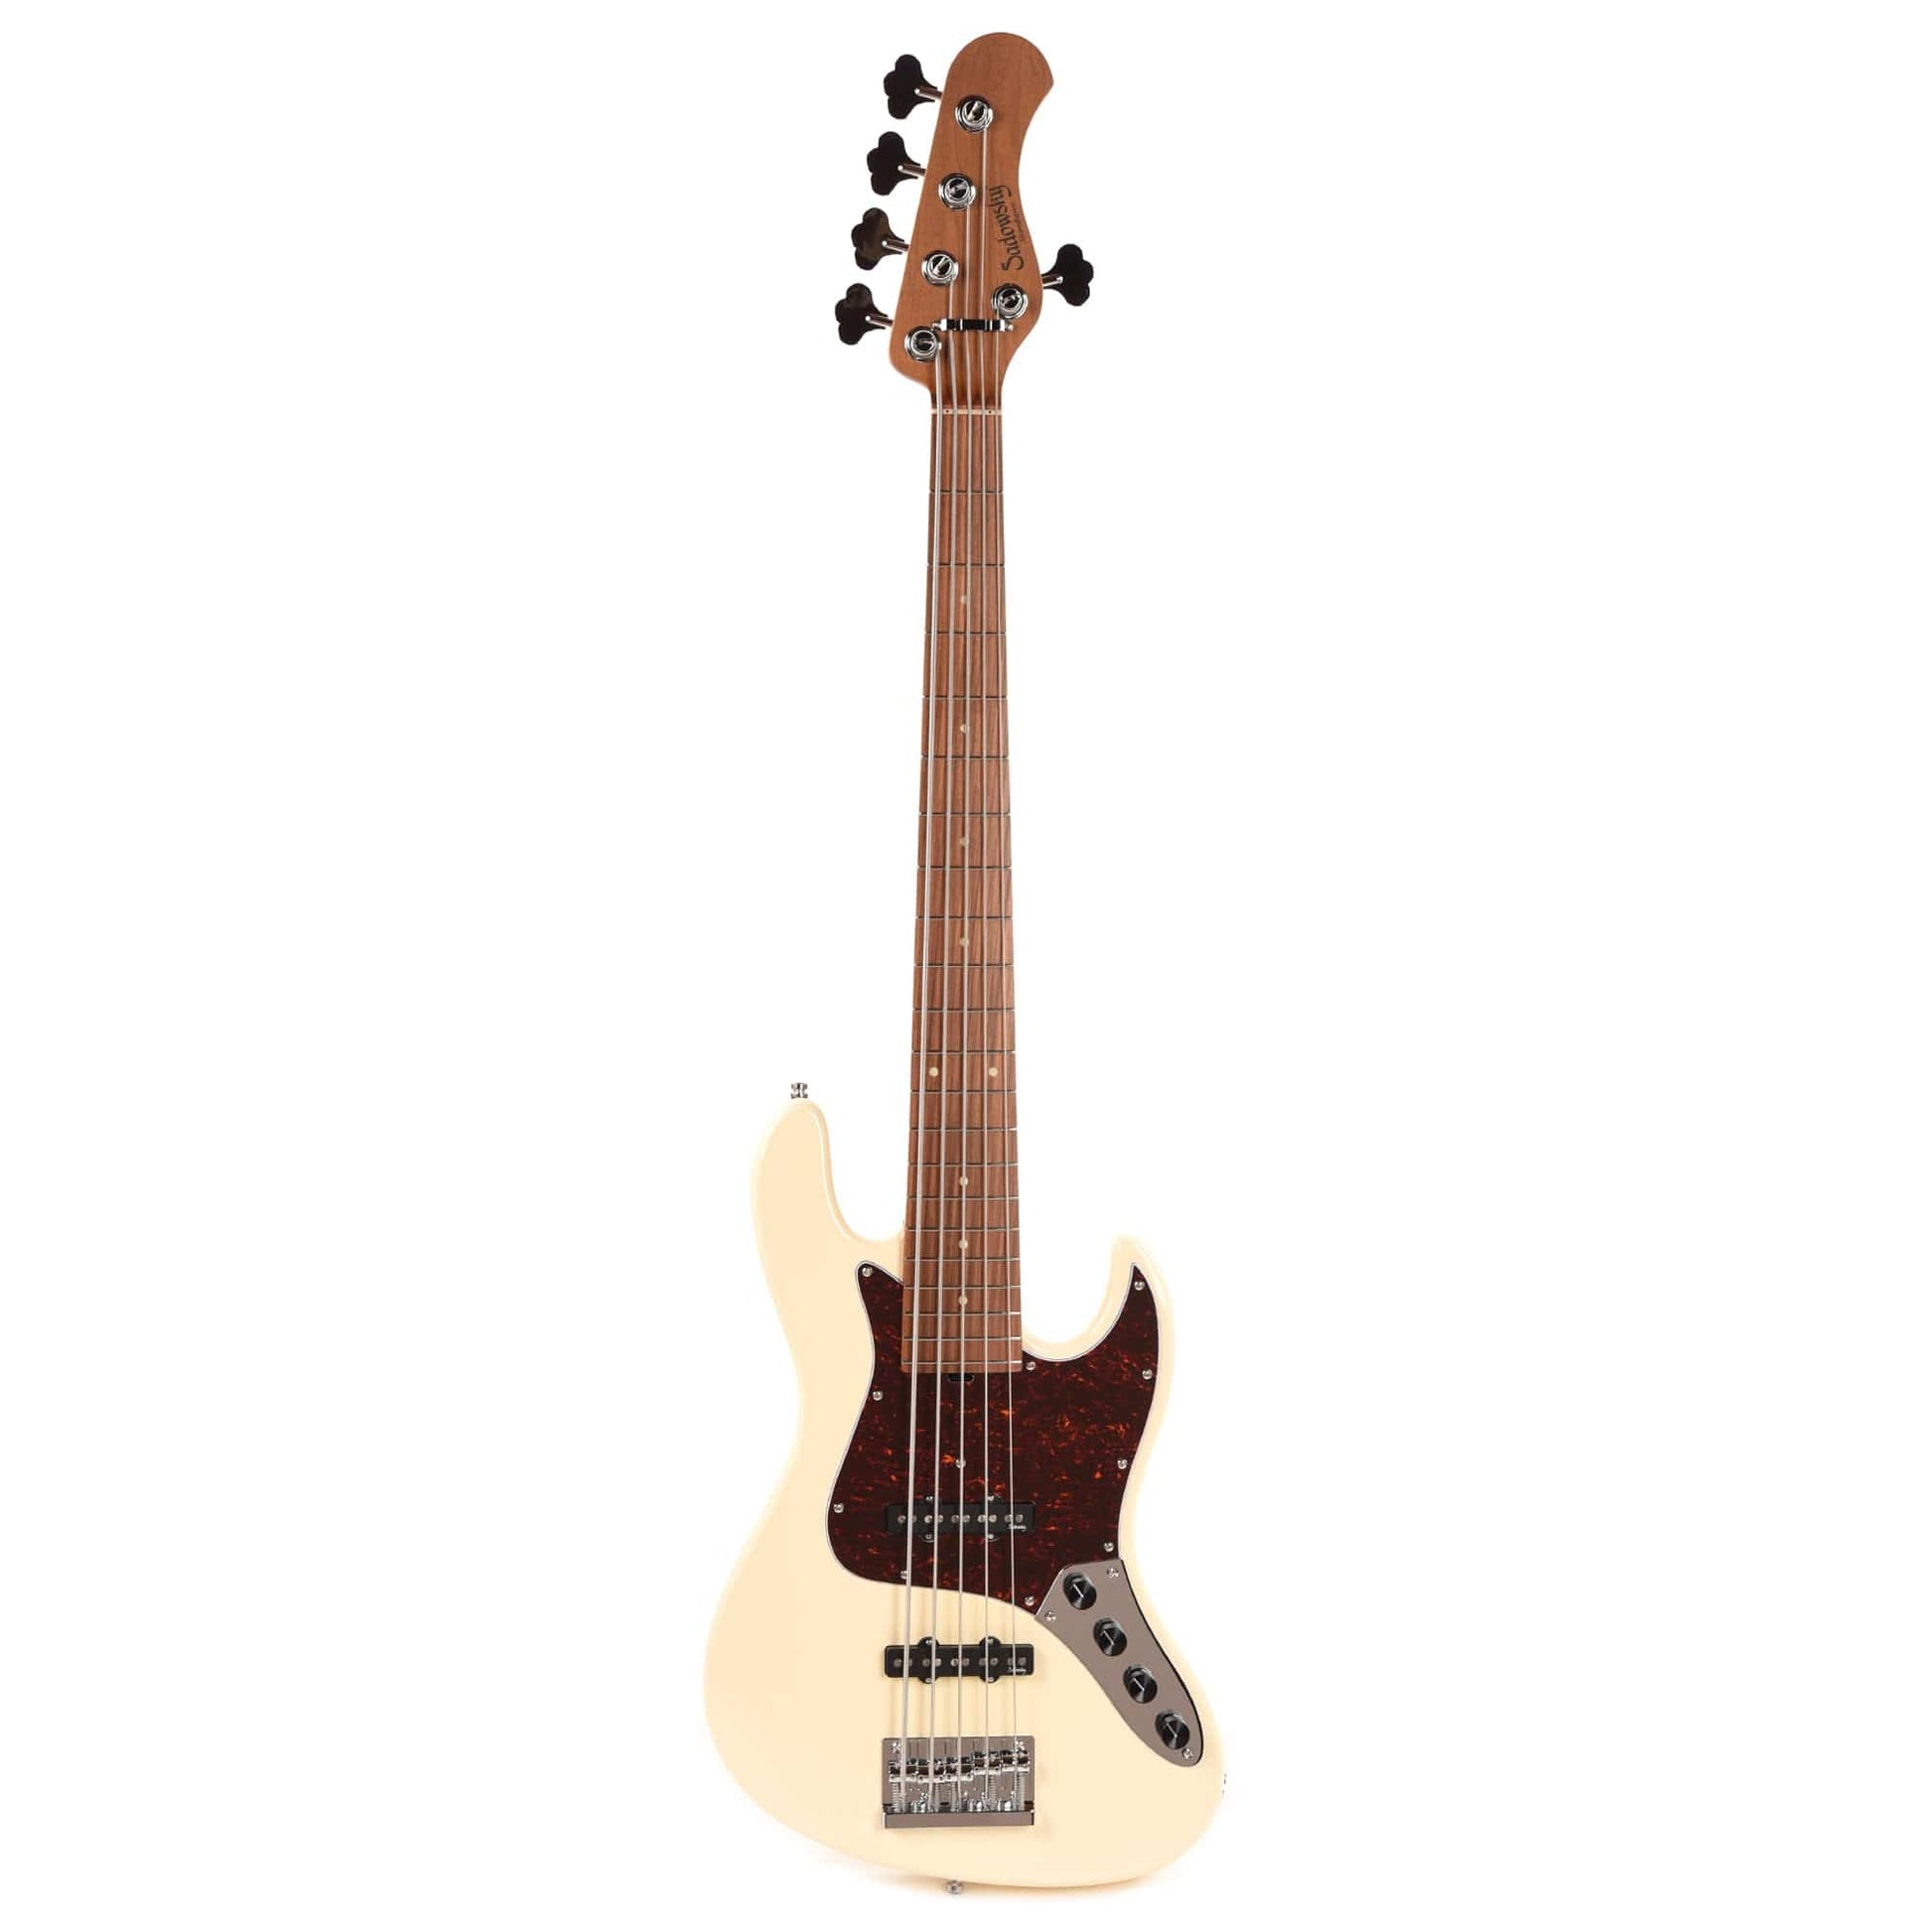 Sadowsky MetroExpress Vintage JJ Bass 5-String Olympic White High Polish Bass Guitars / 5-String or More